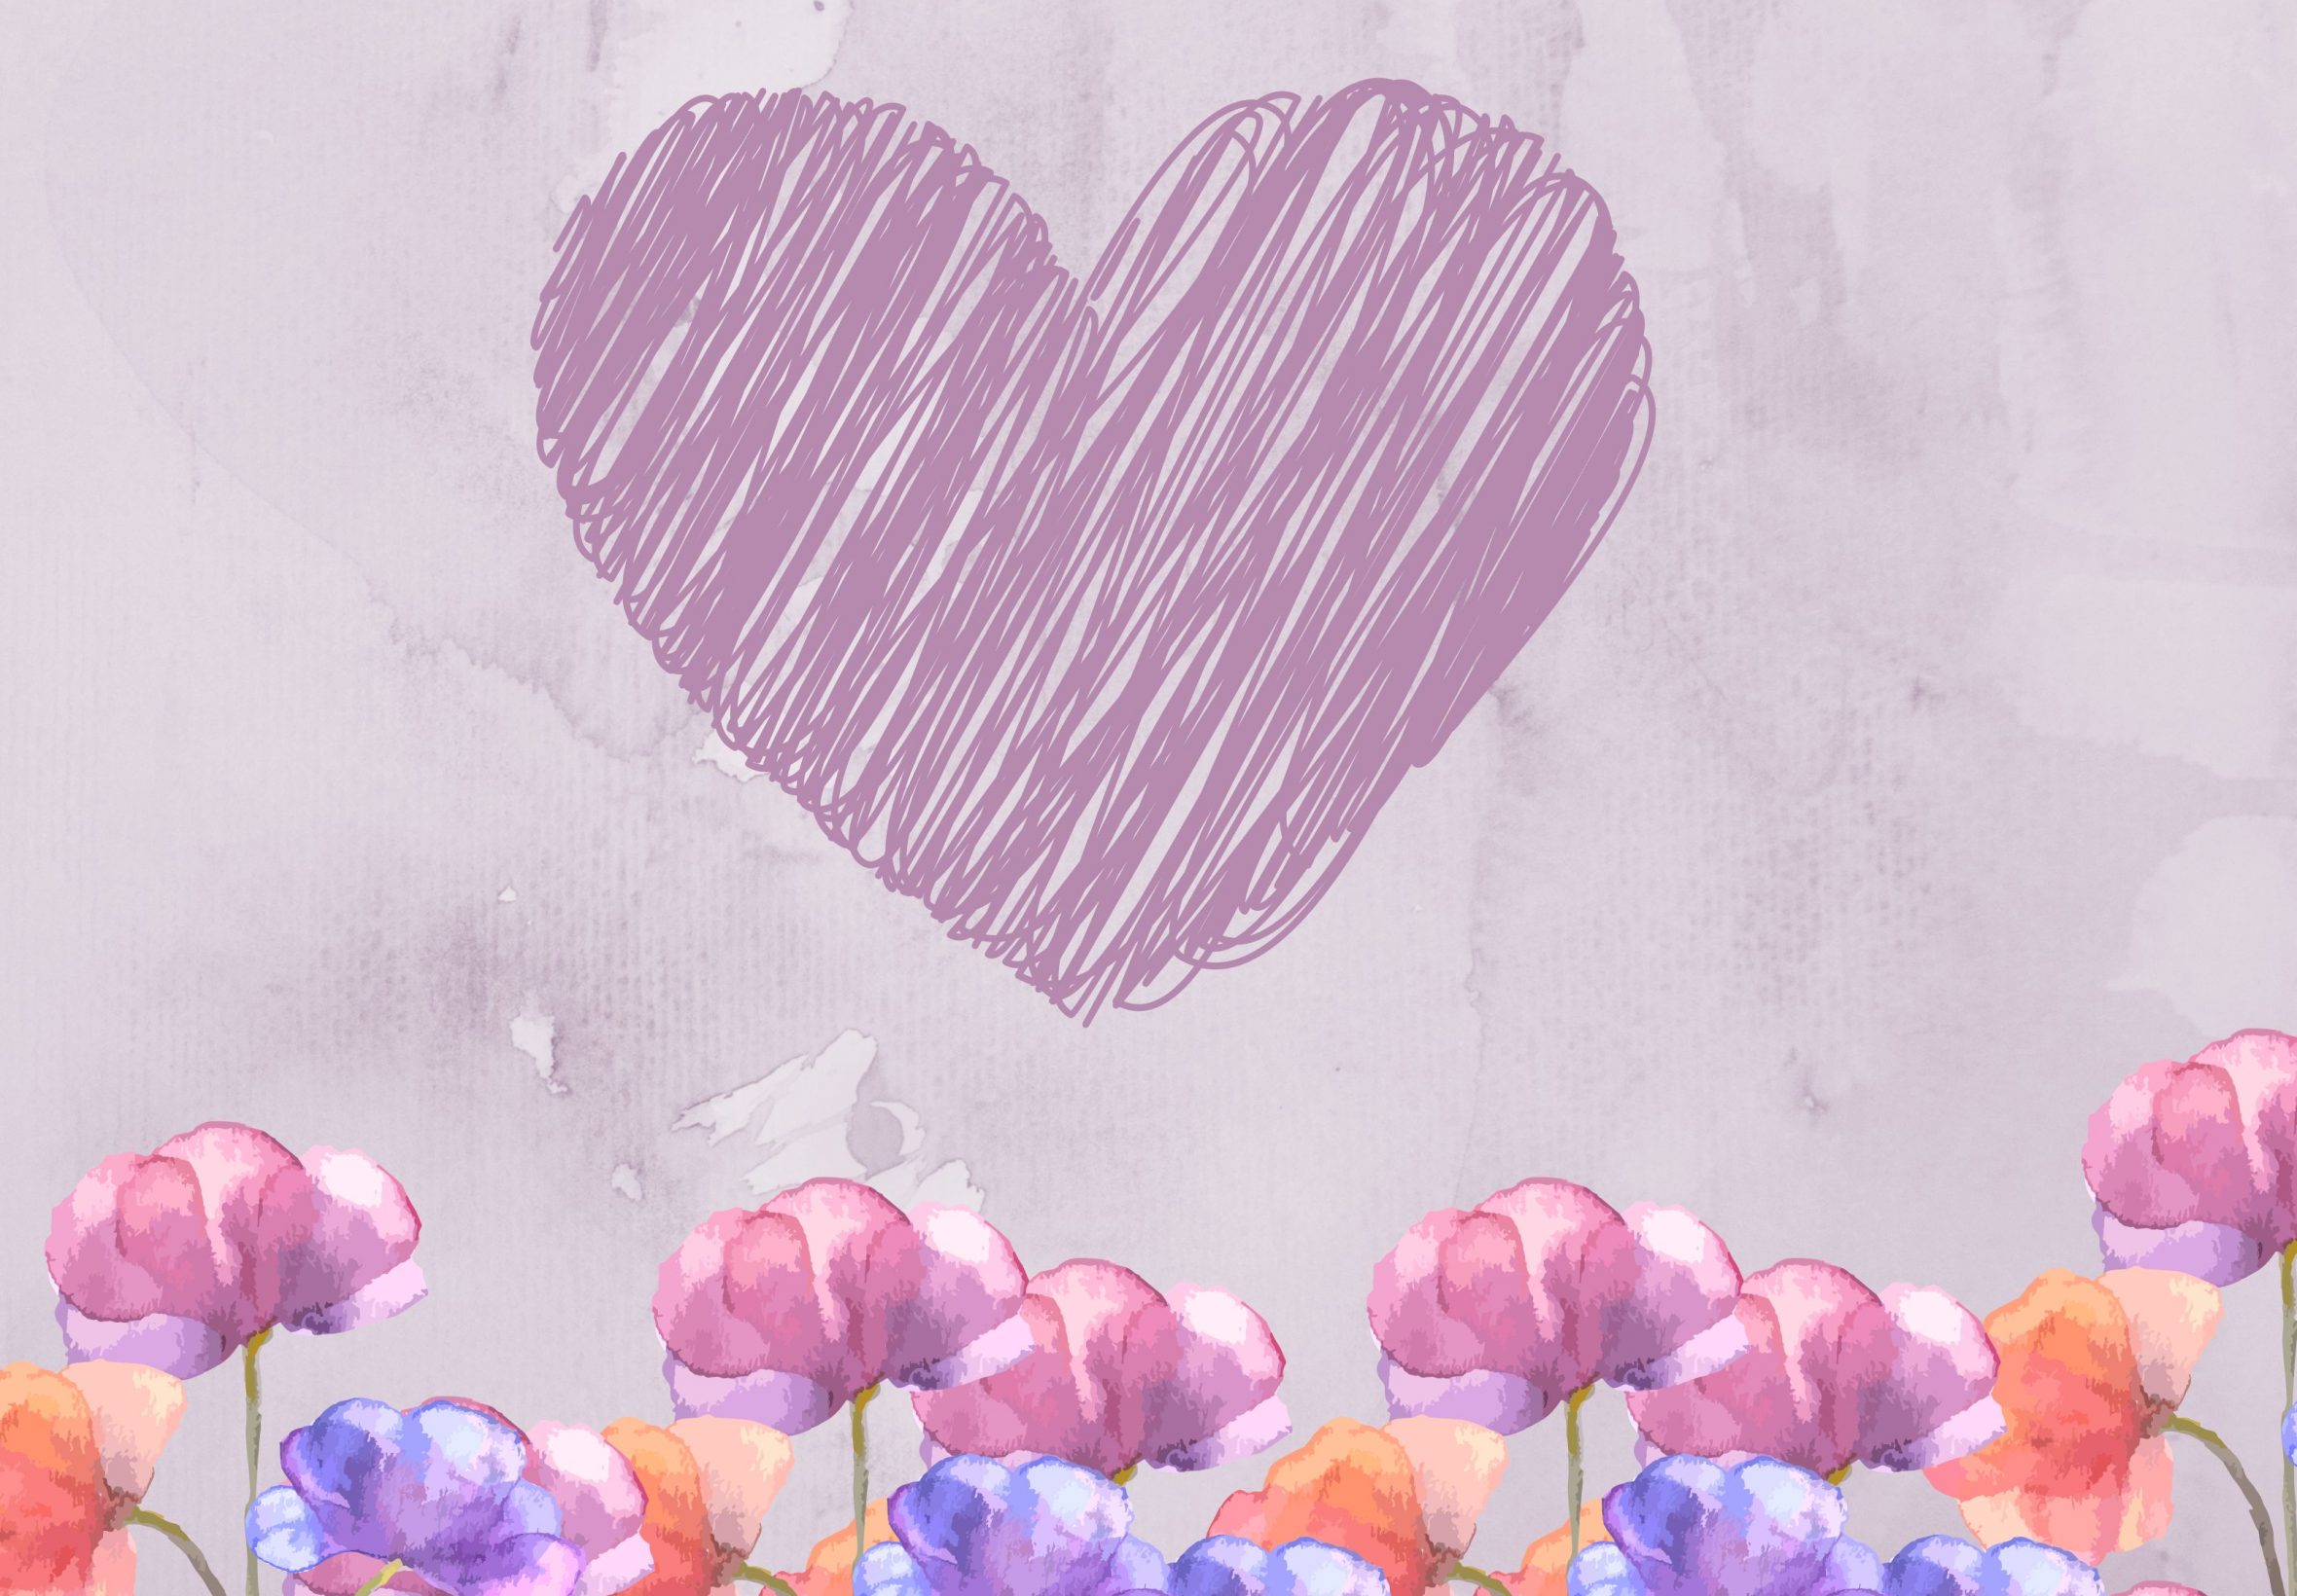 2360x1640 iPad Air wallpaper 4k Heart Floral Pastels Ipad Wallpaper 2360x1640 pixels resolution